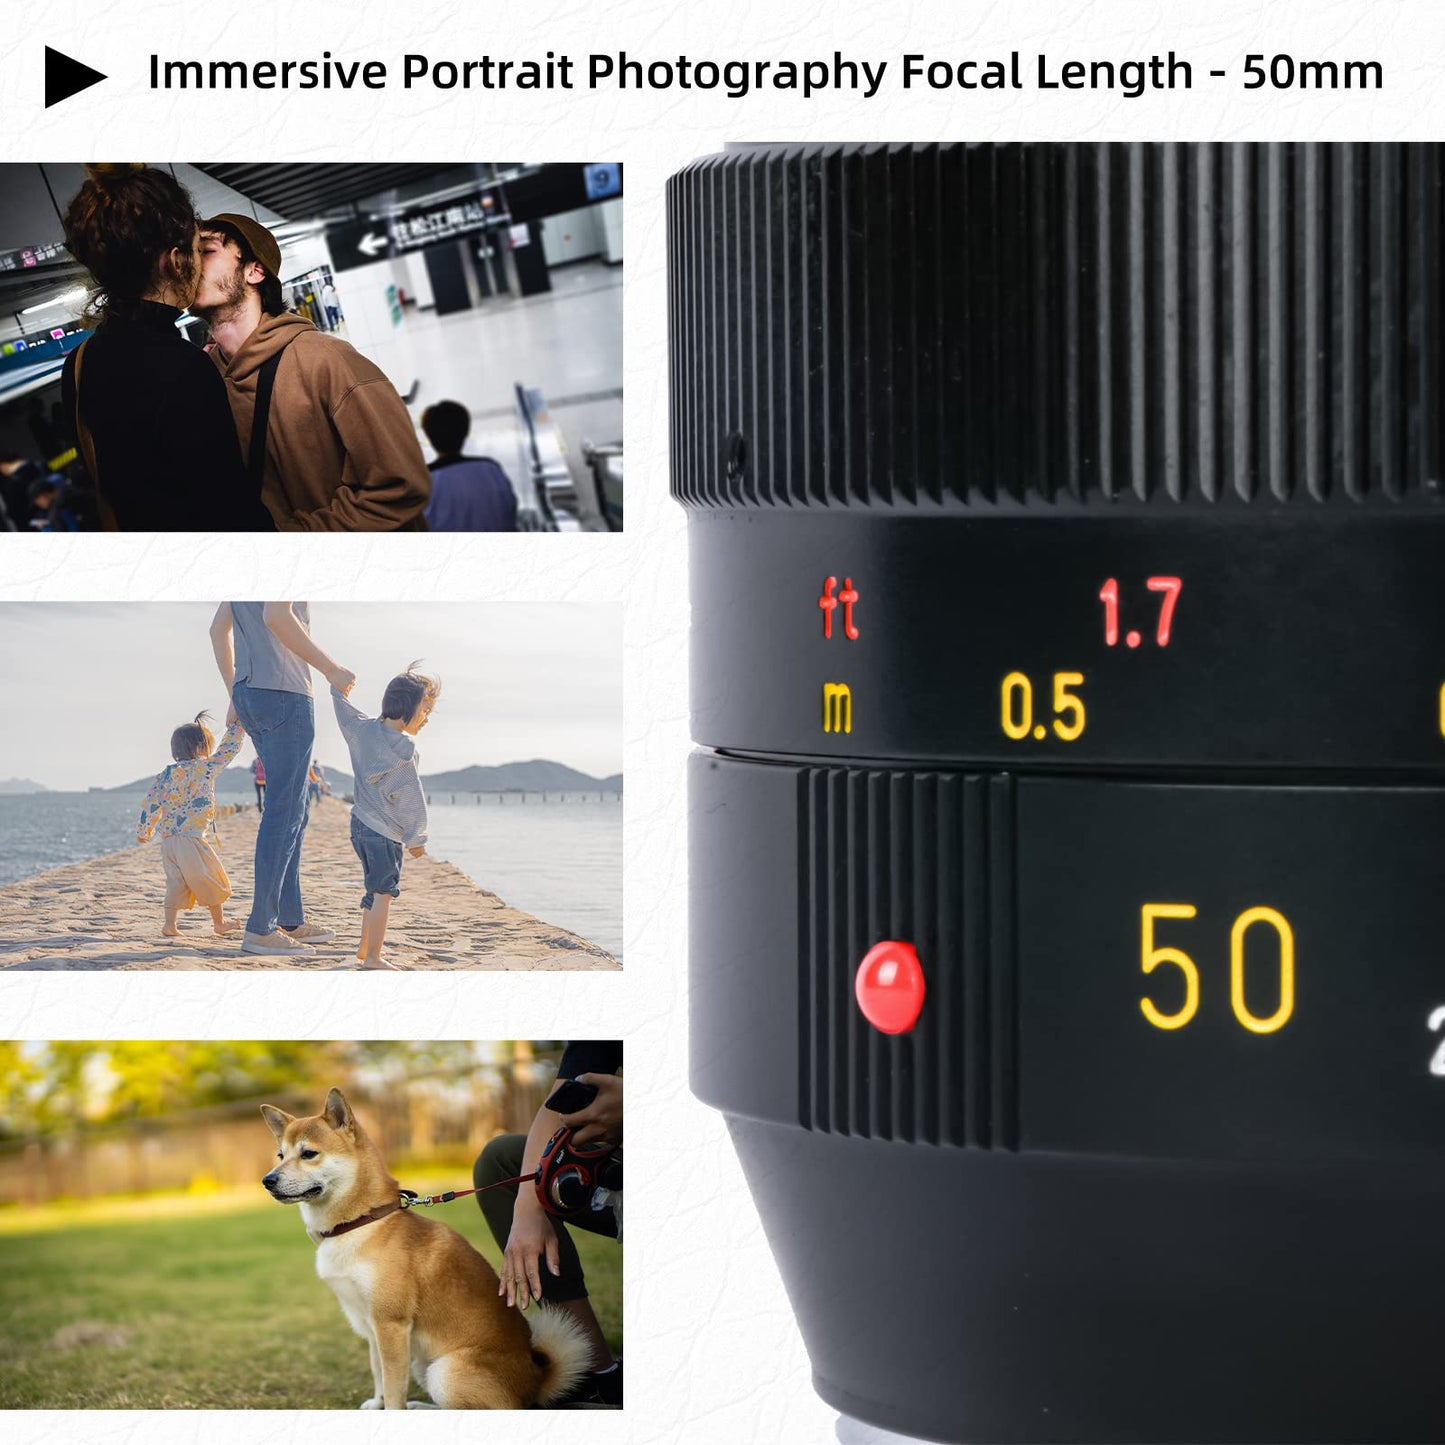 Brightin Star 50mm F0.95 Full Frame Large Aperture Manual Focus Mirrorless Camera Lens